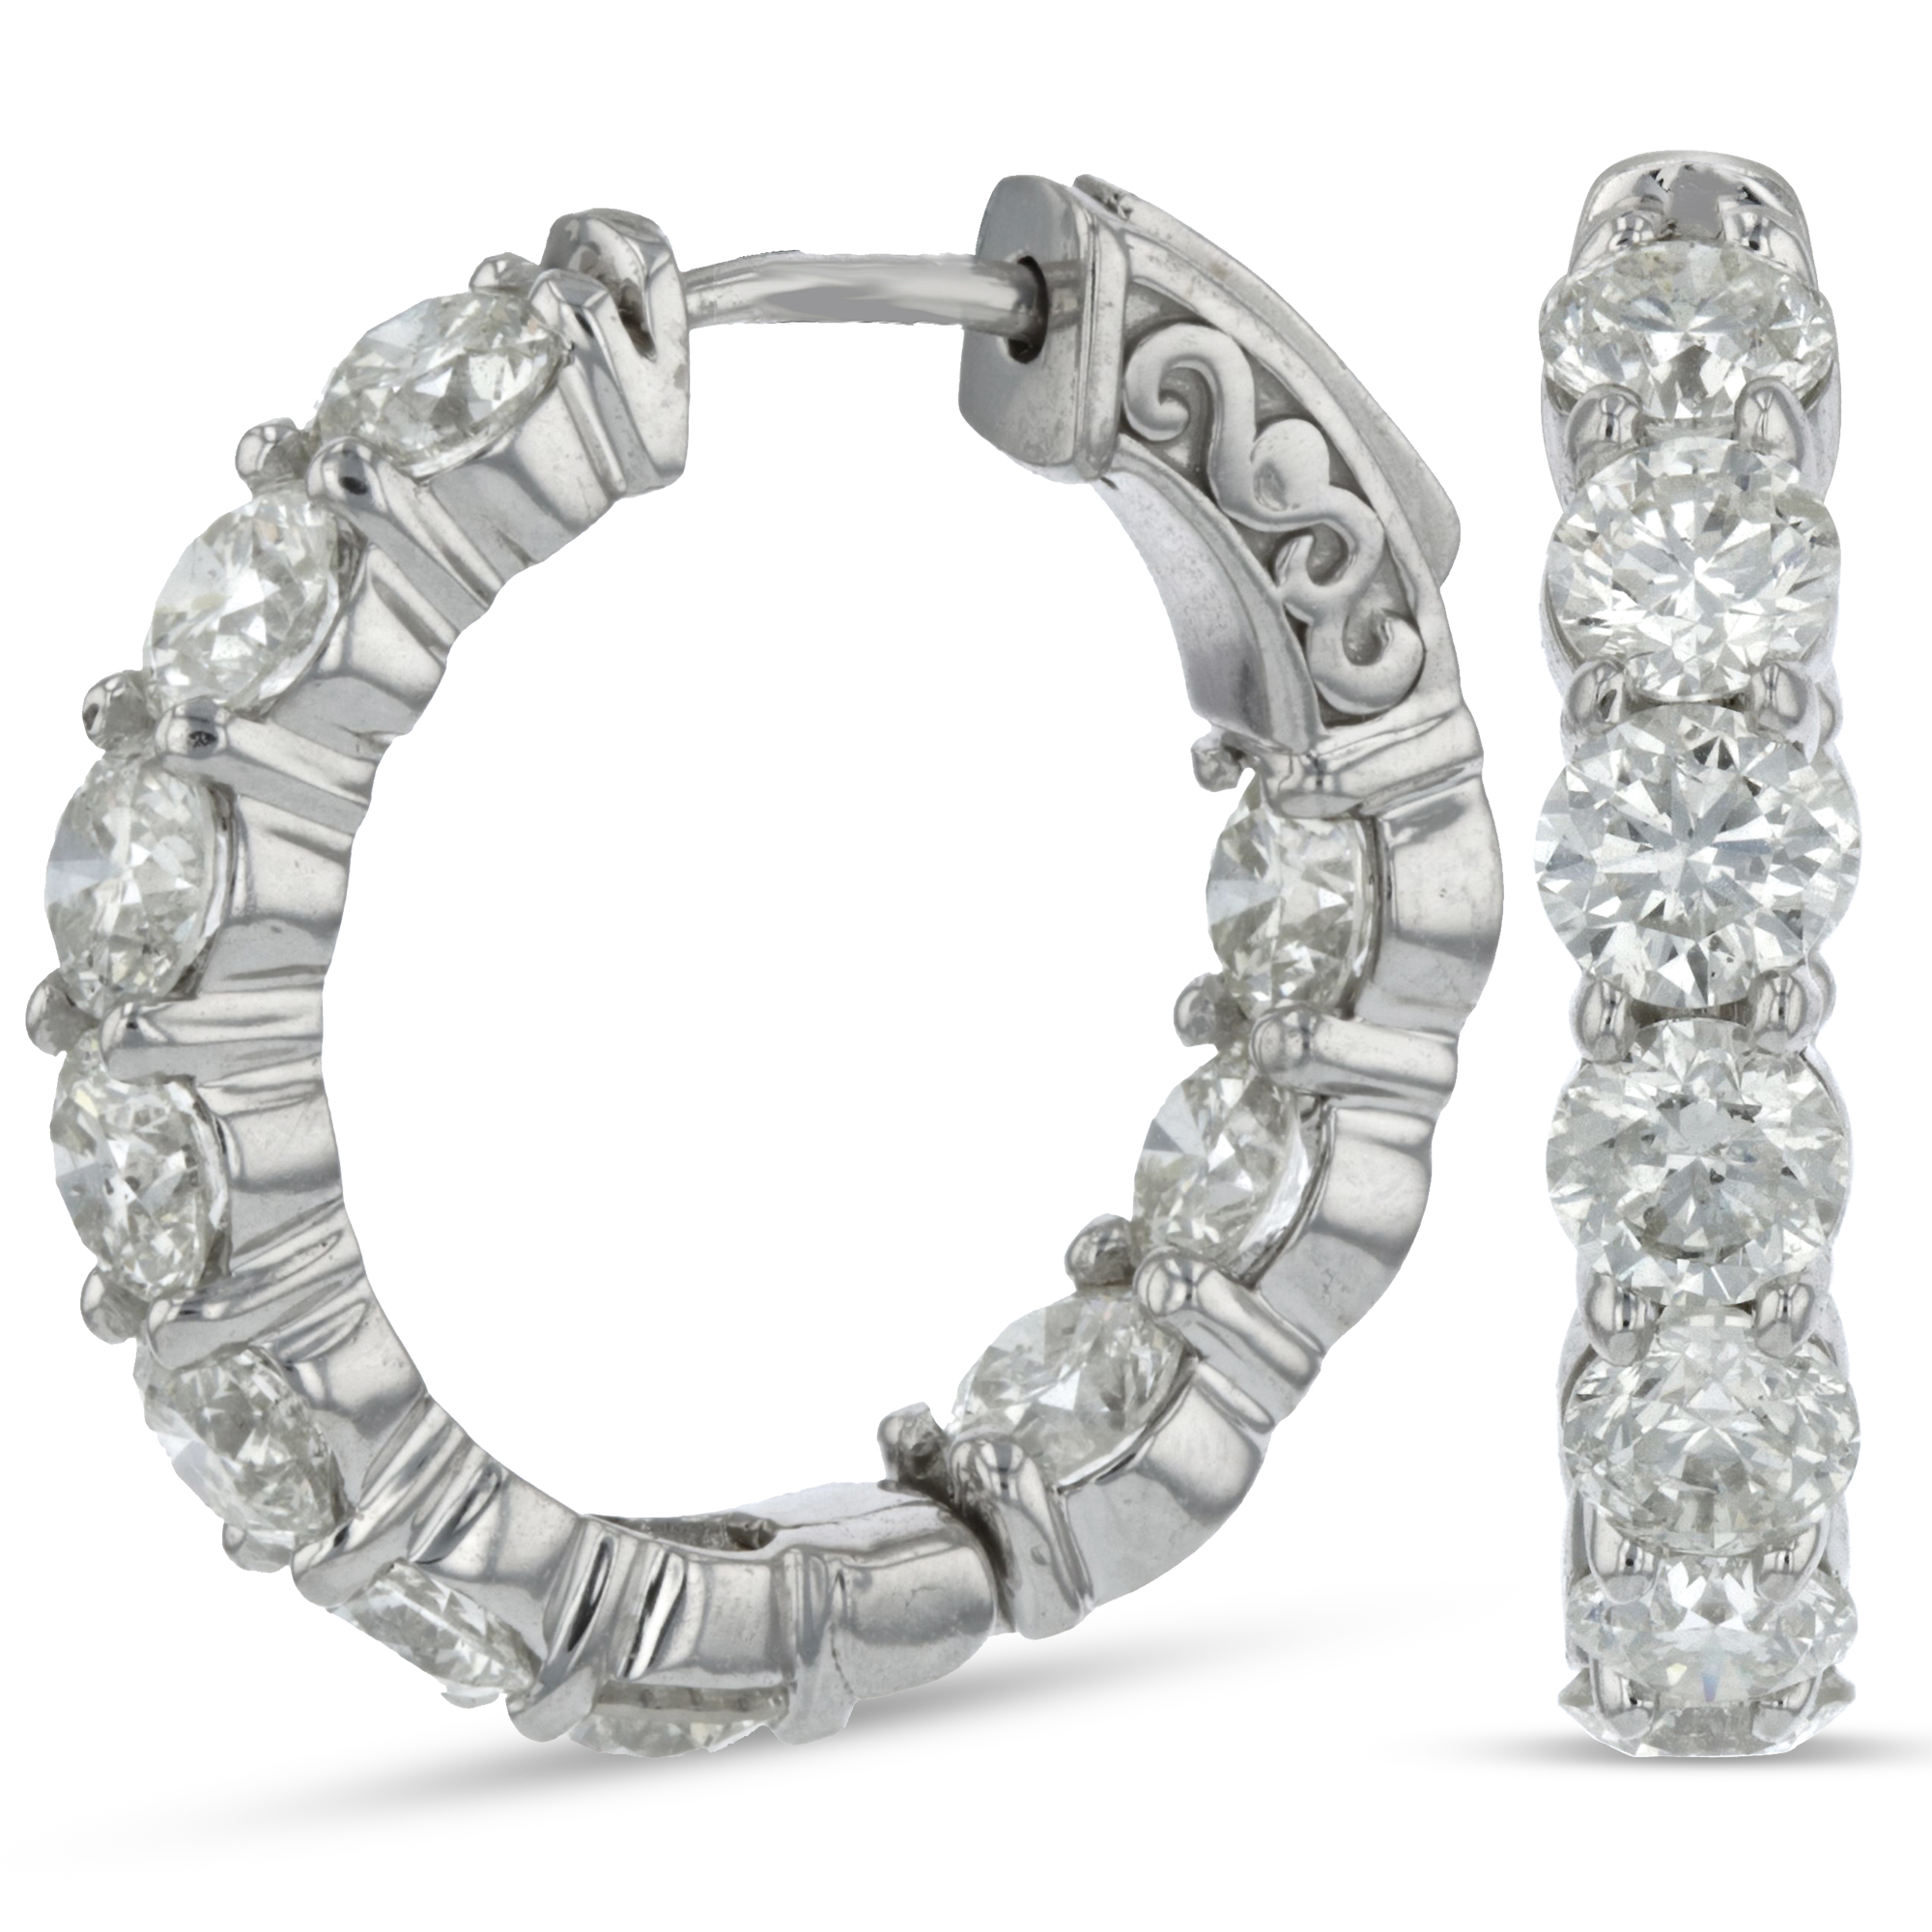 View 5.00ctw Diamond Inside Out Hoop Earrings in 14k White Gold